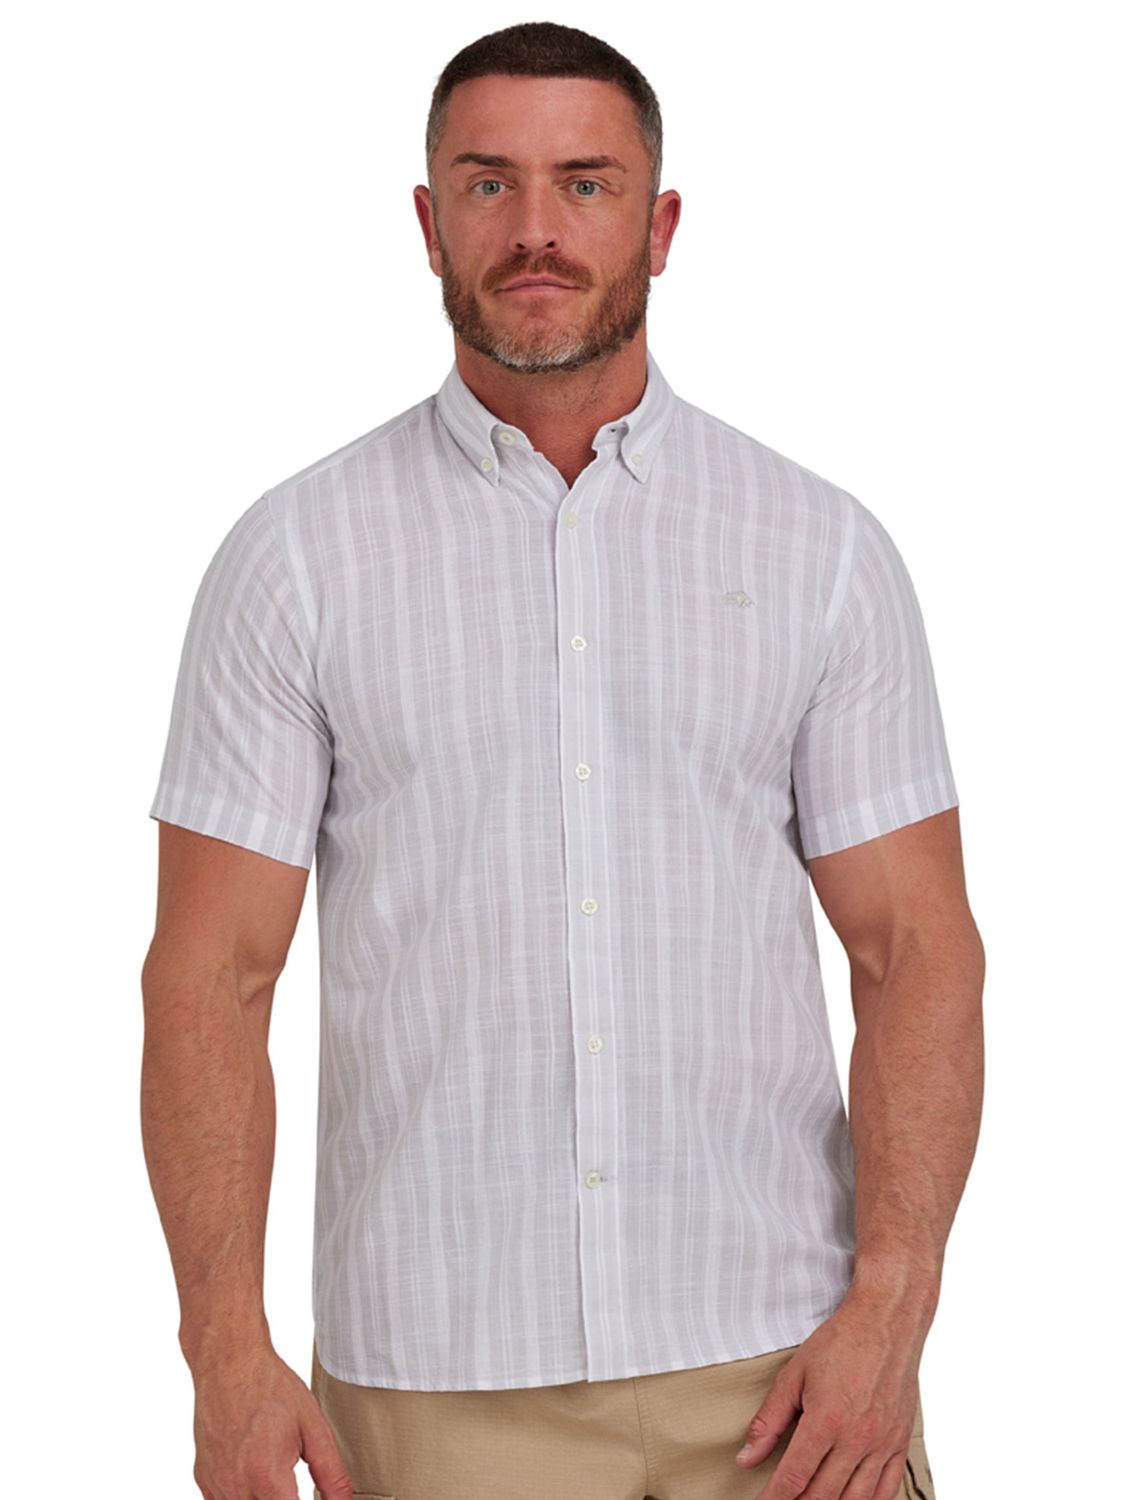 Raging Bull Short Sleeve Multi Stripe Linen Look Shirt, Grey, XL